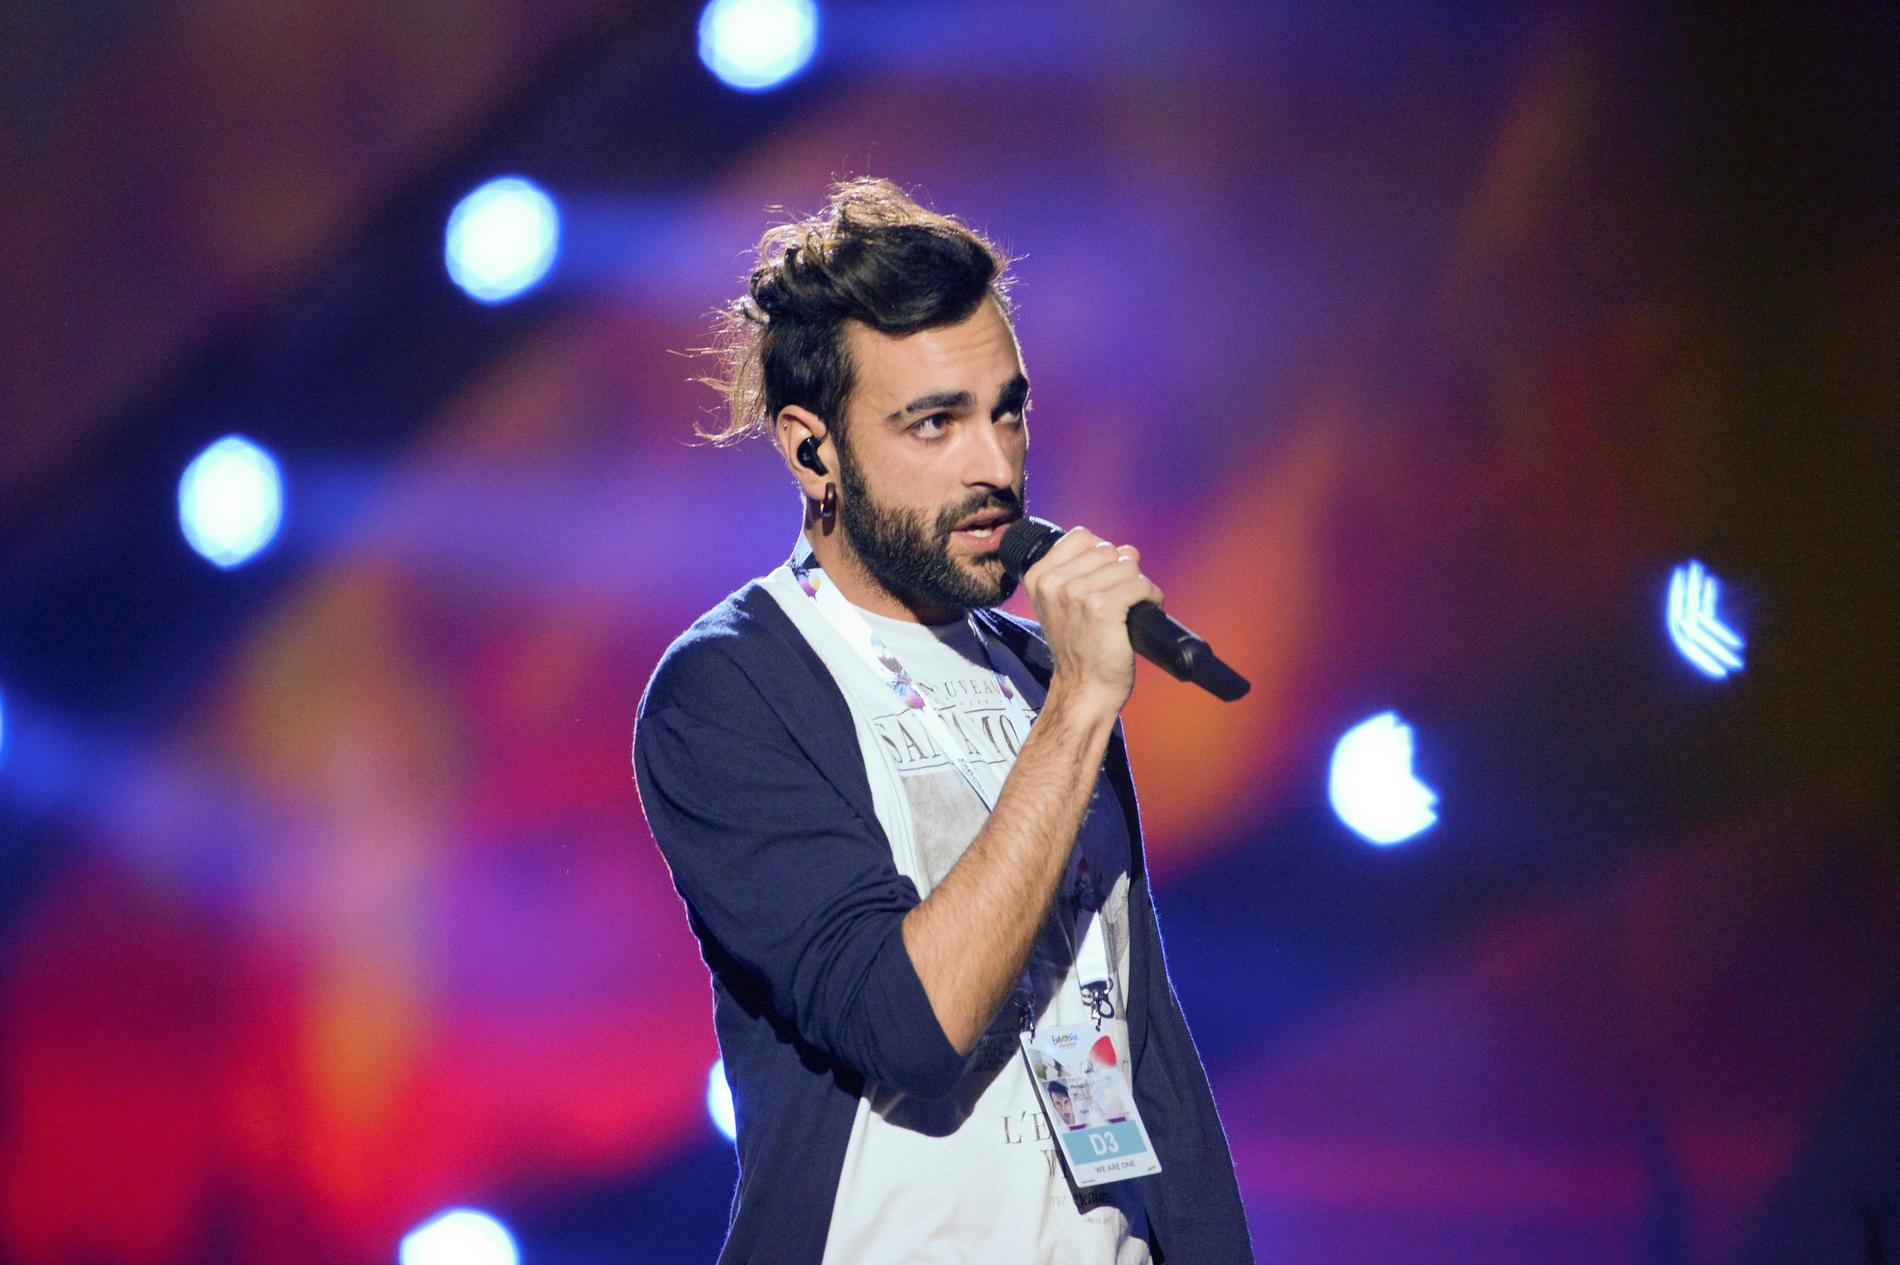 Marco Mengoni framför "L'essenziale" i Eurovision song contest 2013. Arkivbild.